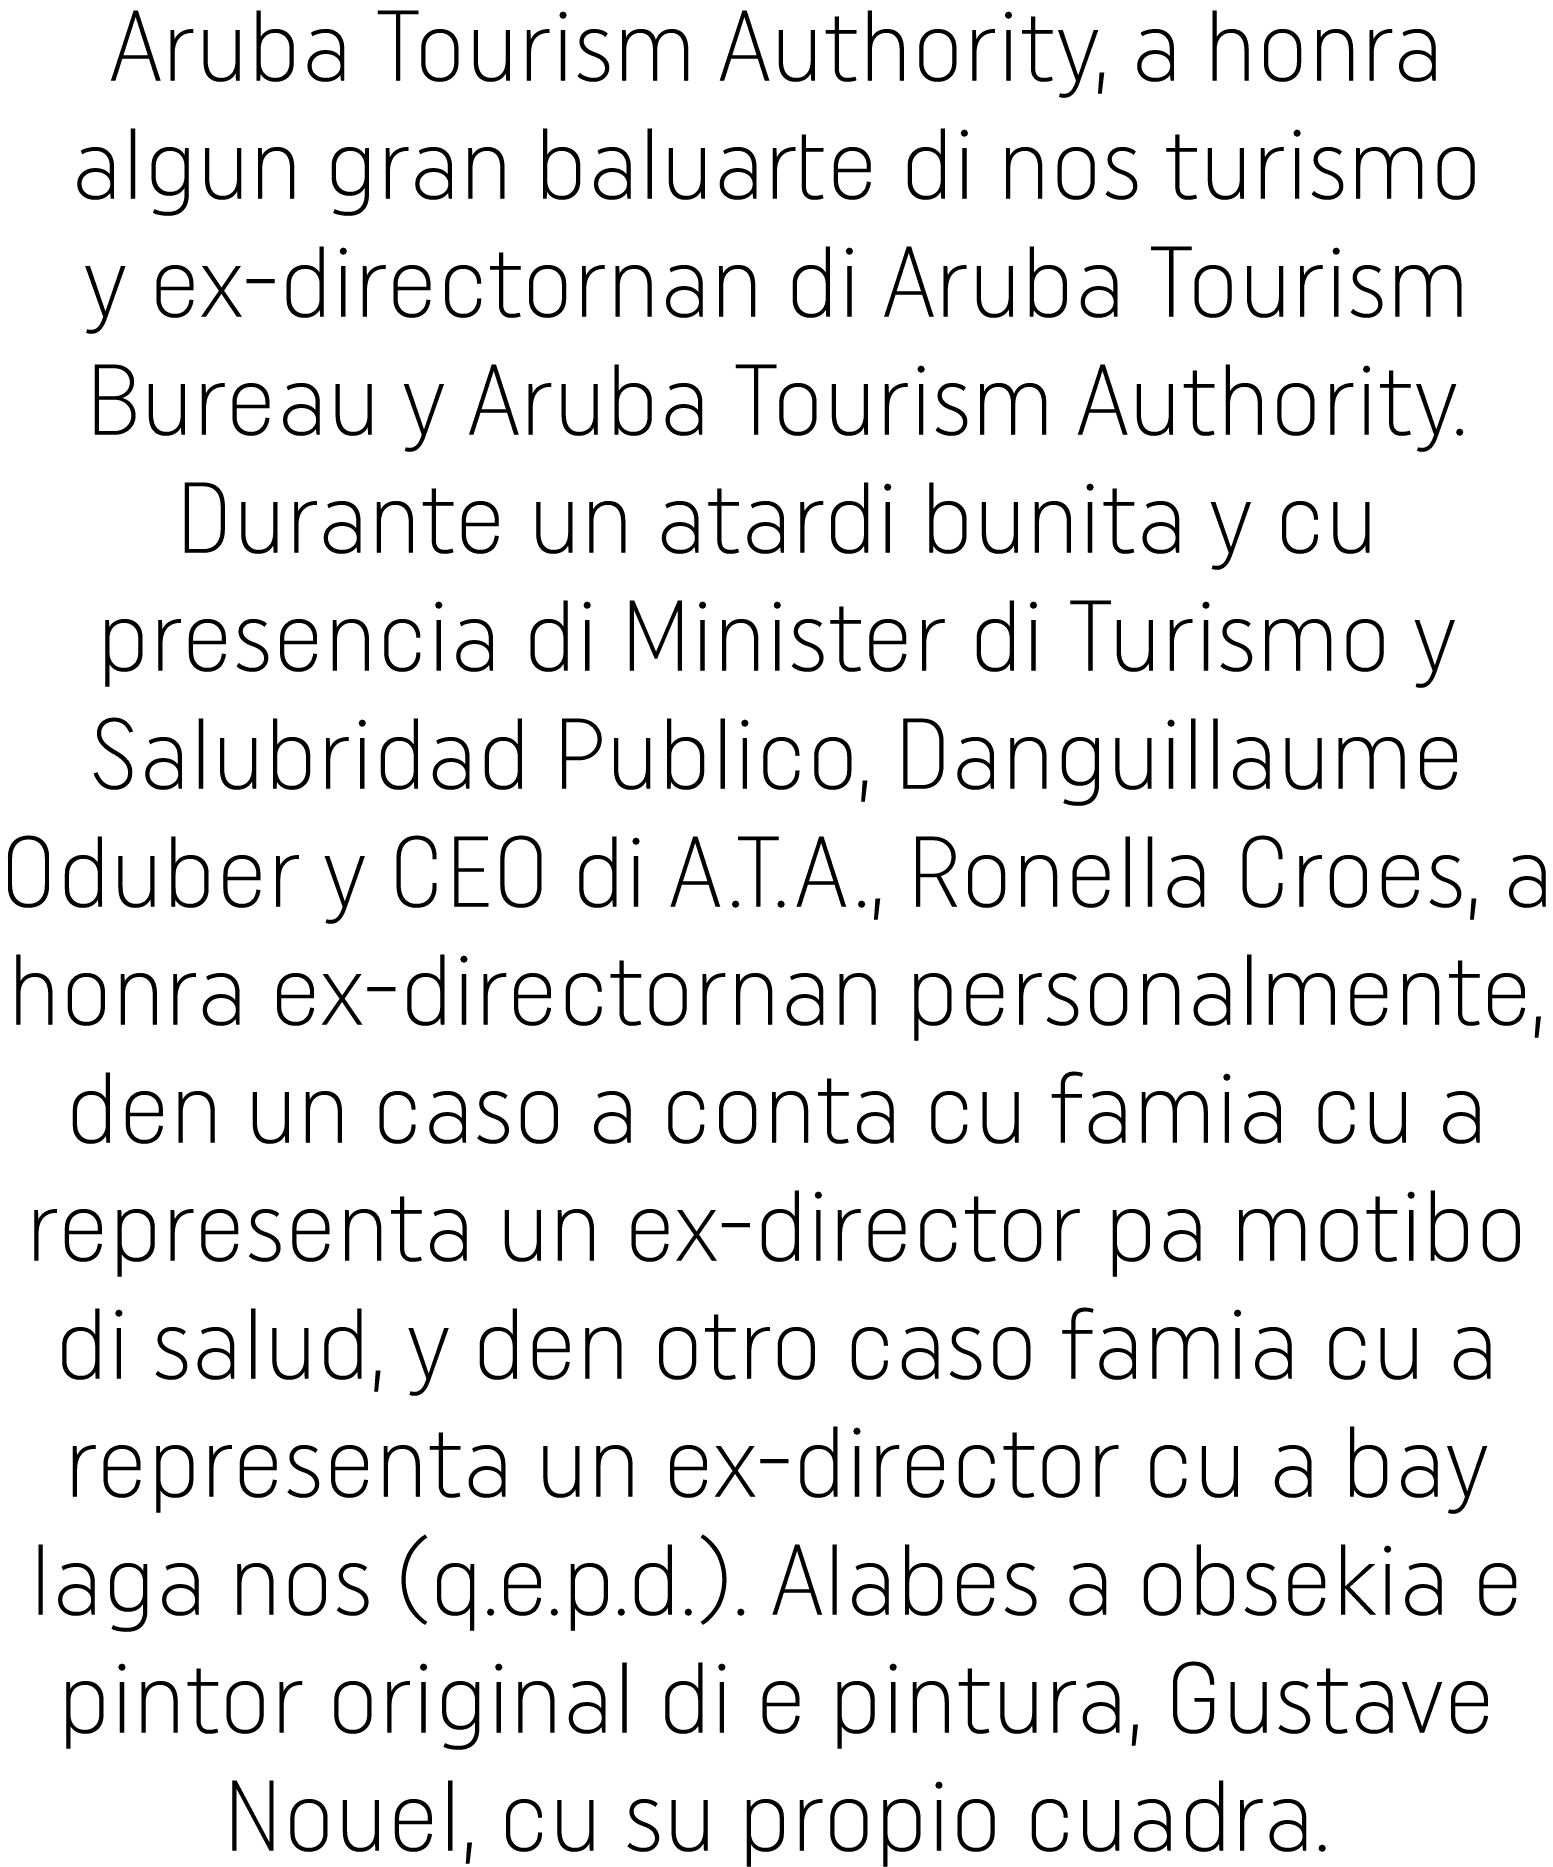 Aruba Tourism Authority, a honra algun gran baluarte di nos turismo y ex-directornan di Aruba Tourism Bureau y Aruba    